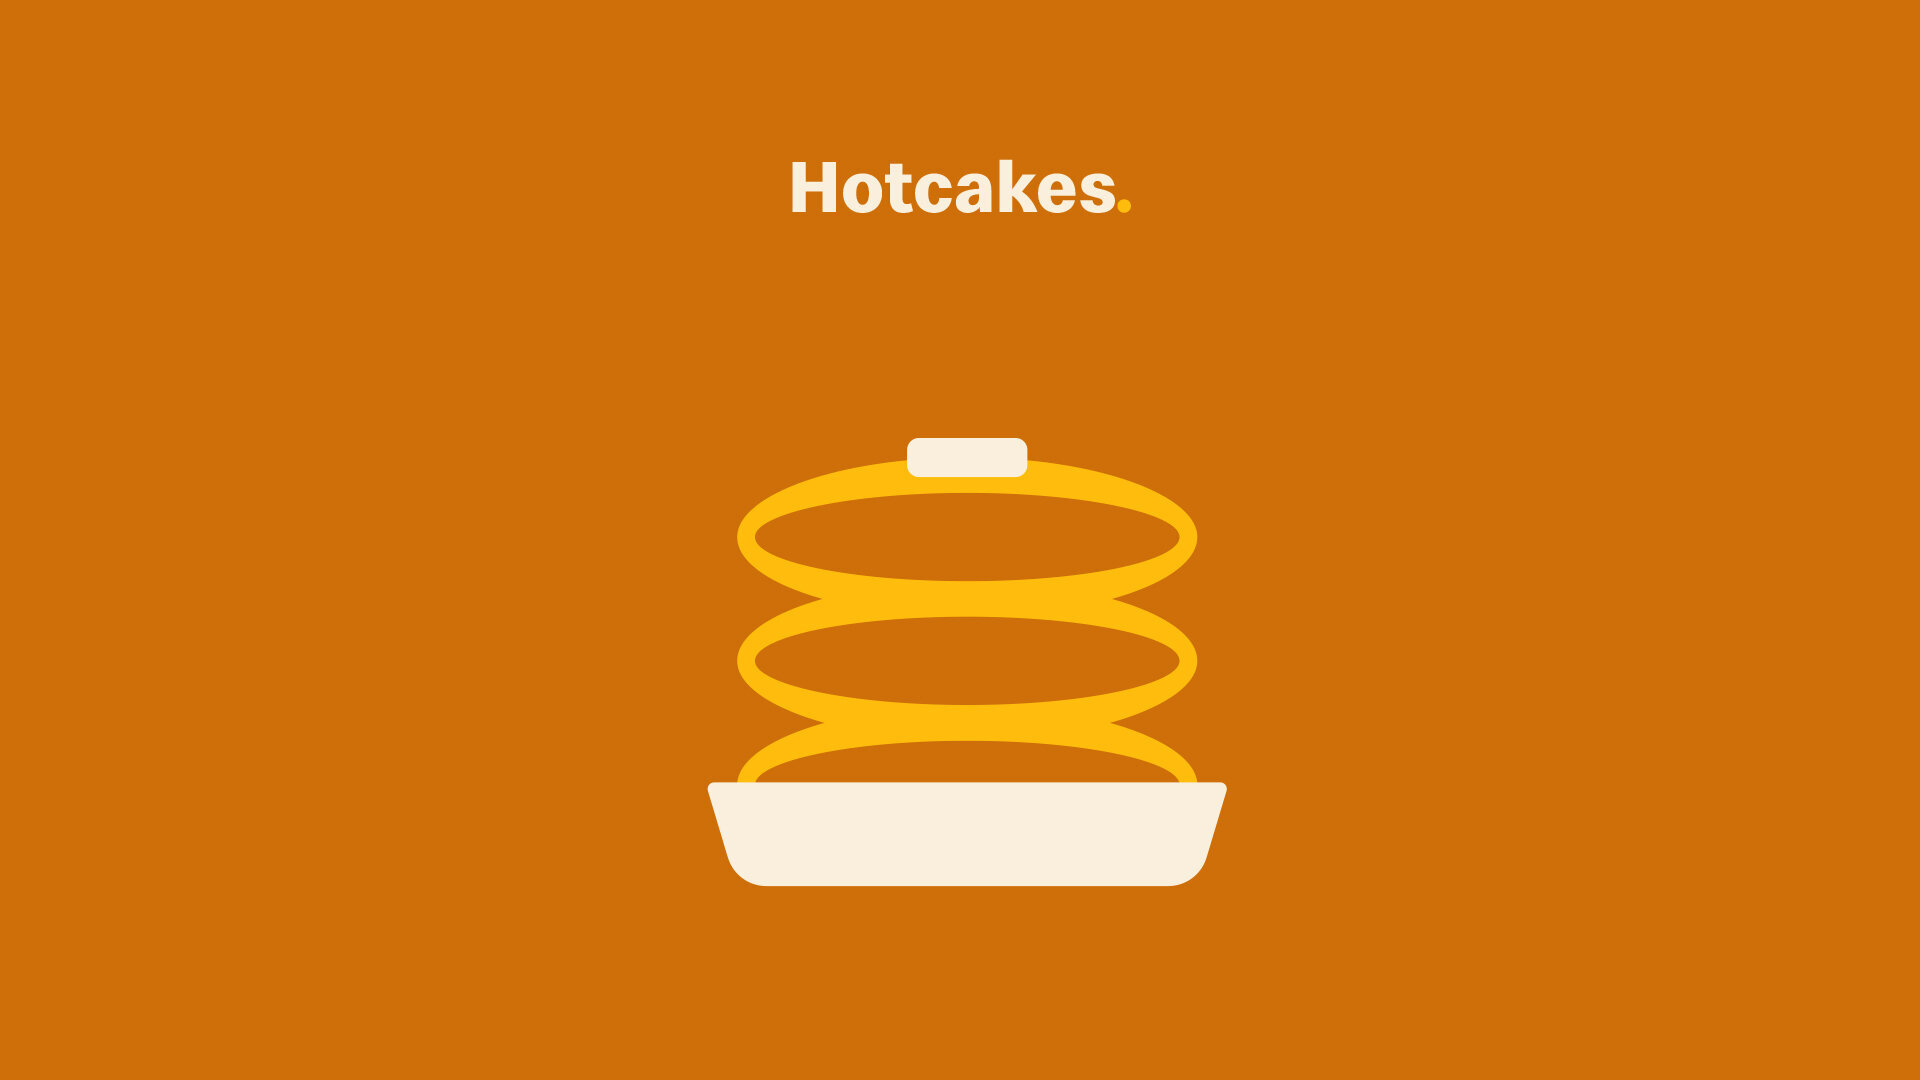 McD-PR-Hotcakes-16x9.jpg